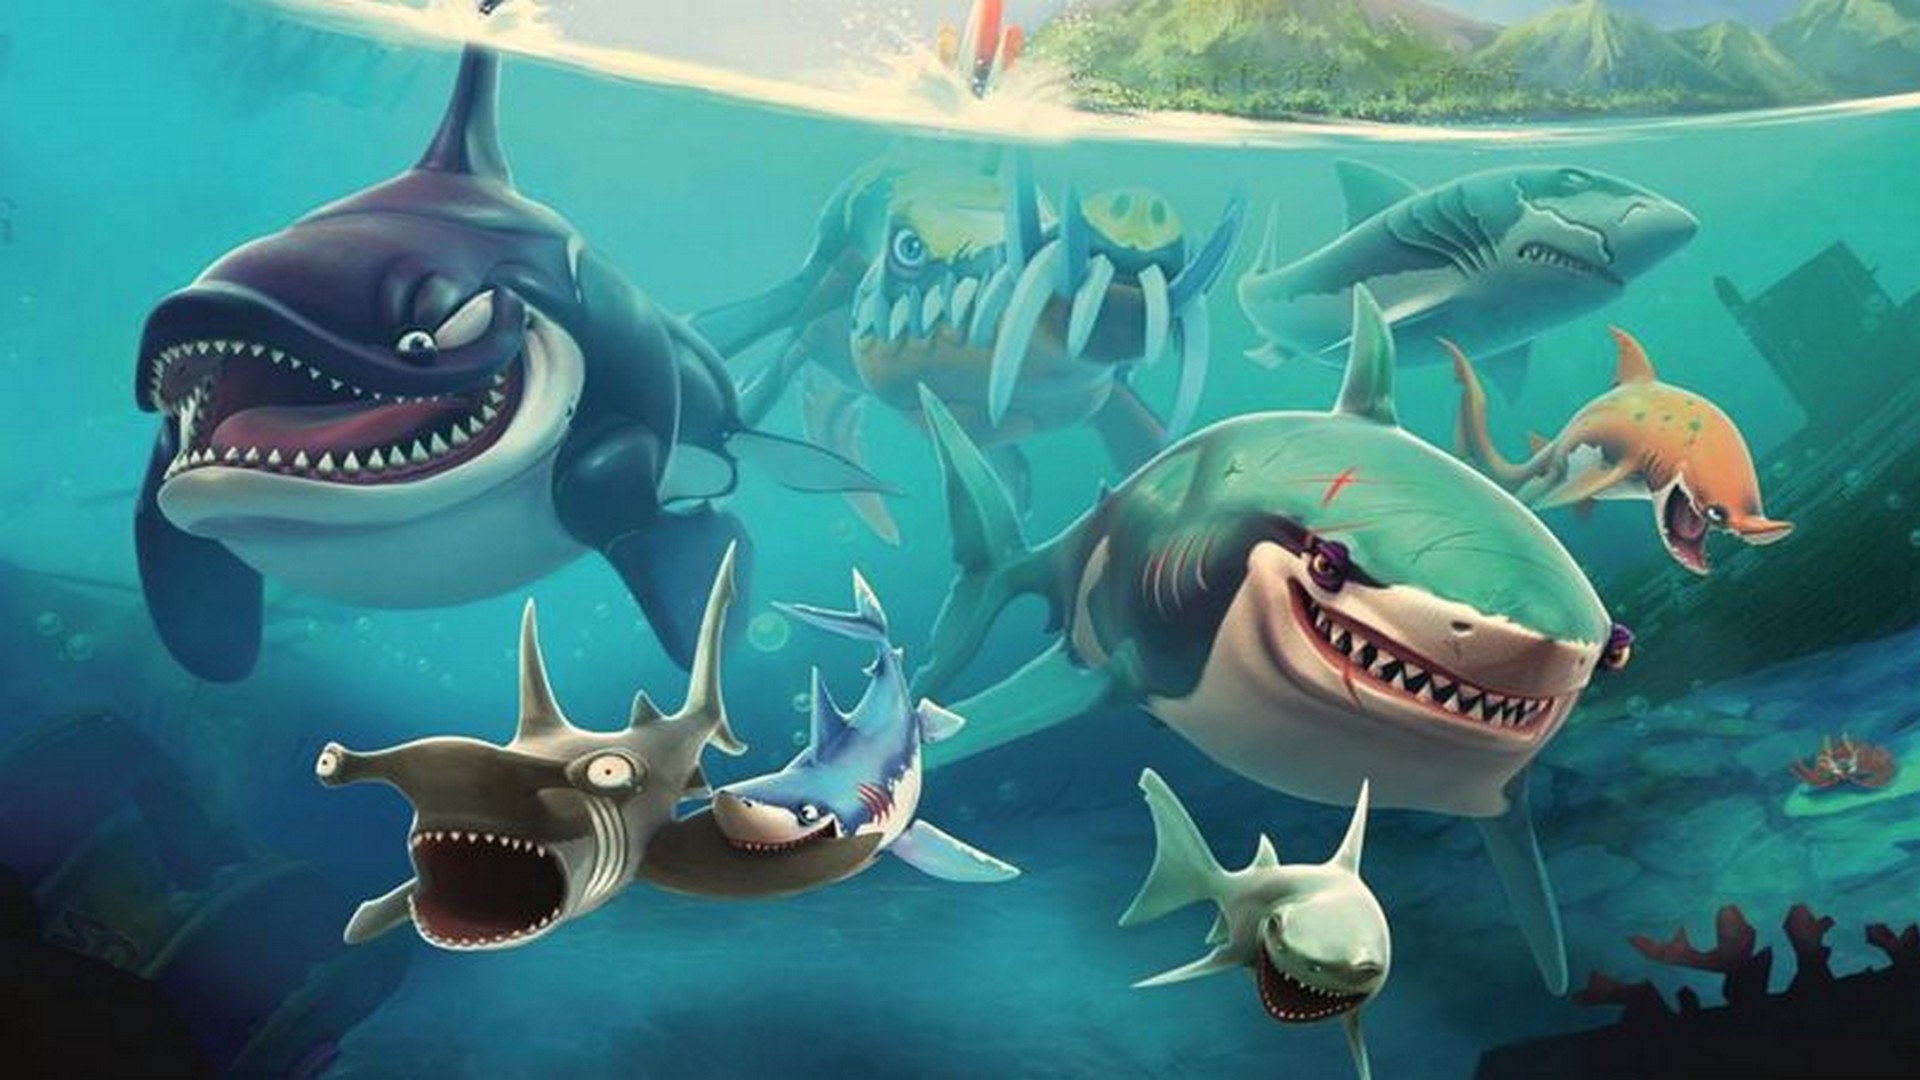 Ubisoft - Hungry Shark World